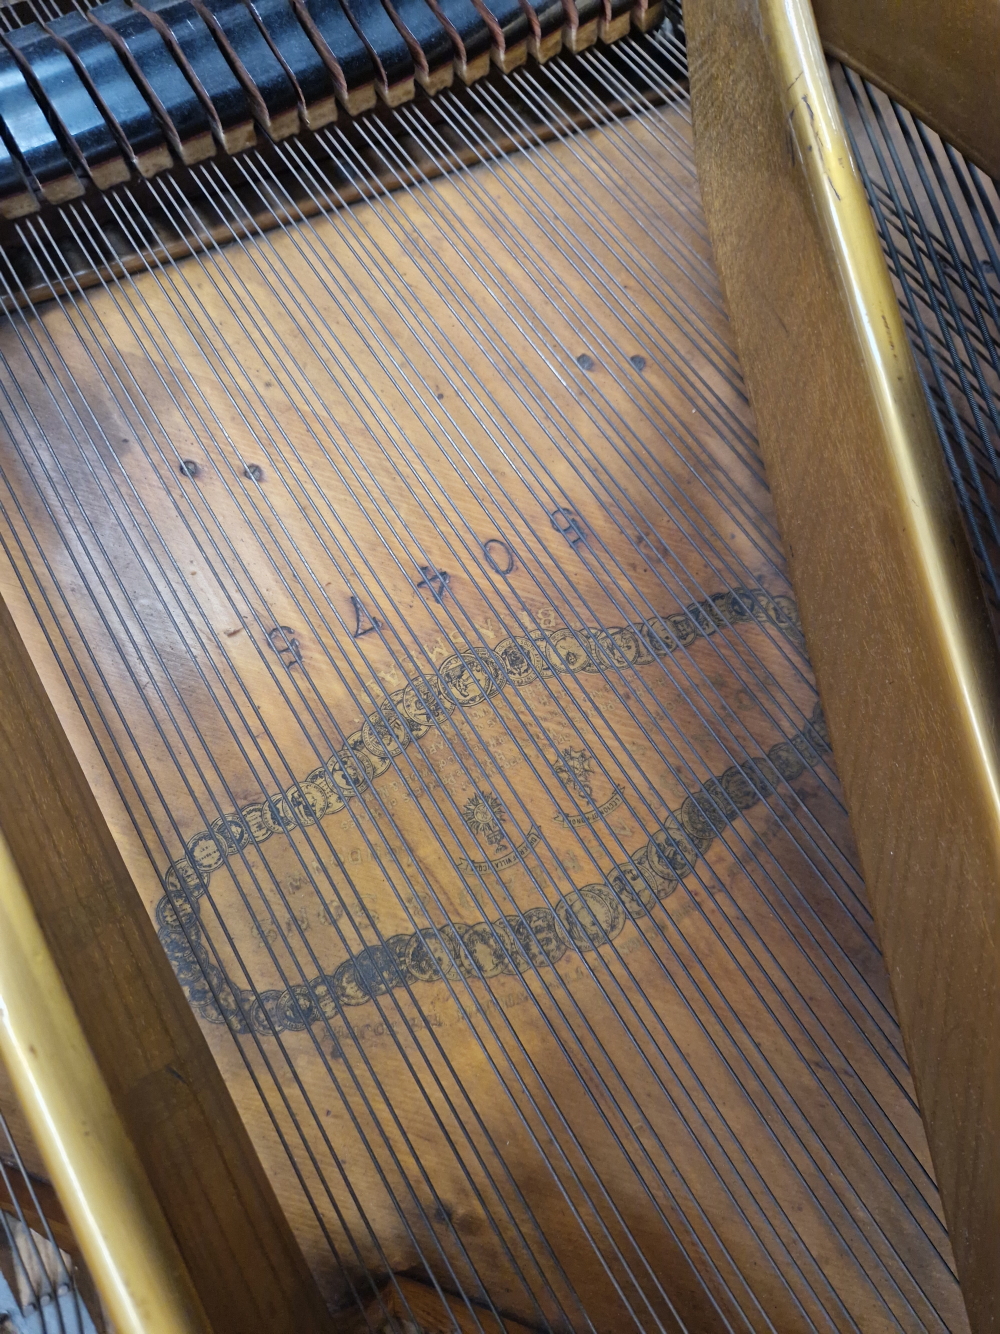 A MAHOGANY CASED GRAND PIANO BY JOHN BRINSMEAD & SONS - Image 6 of 10